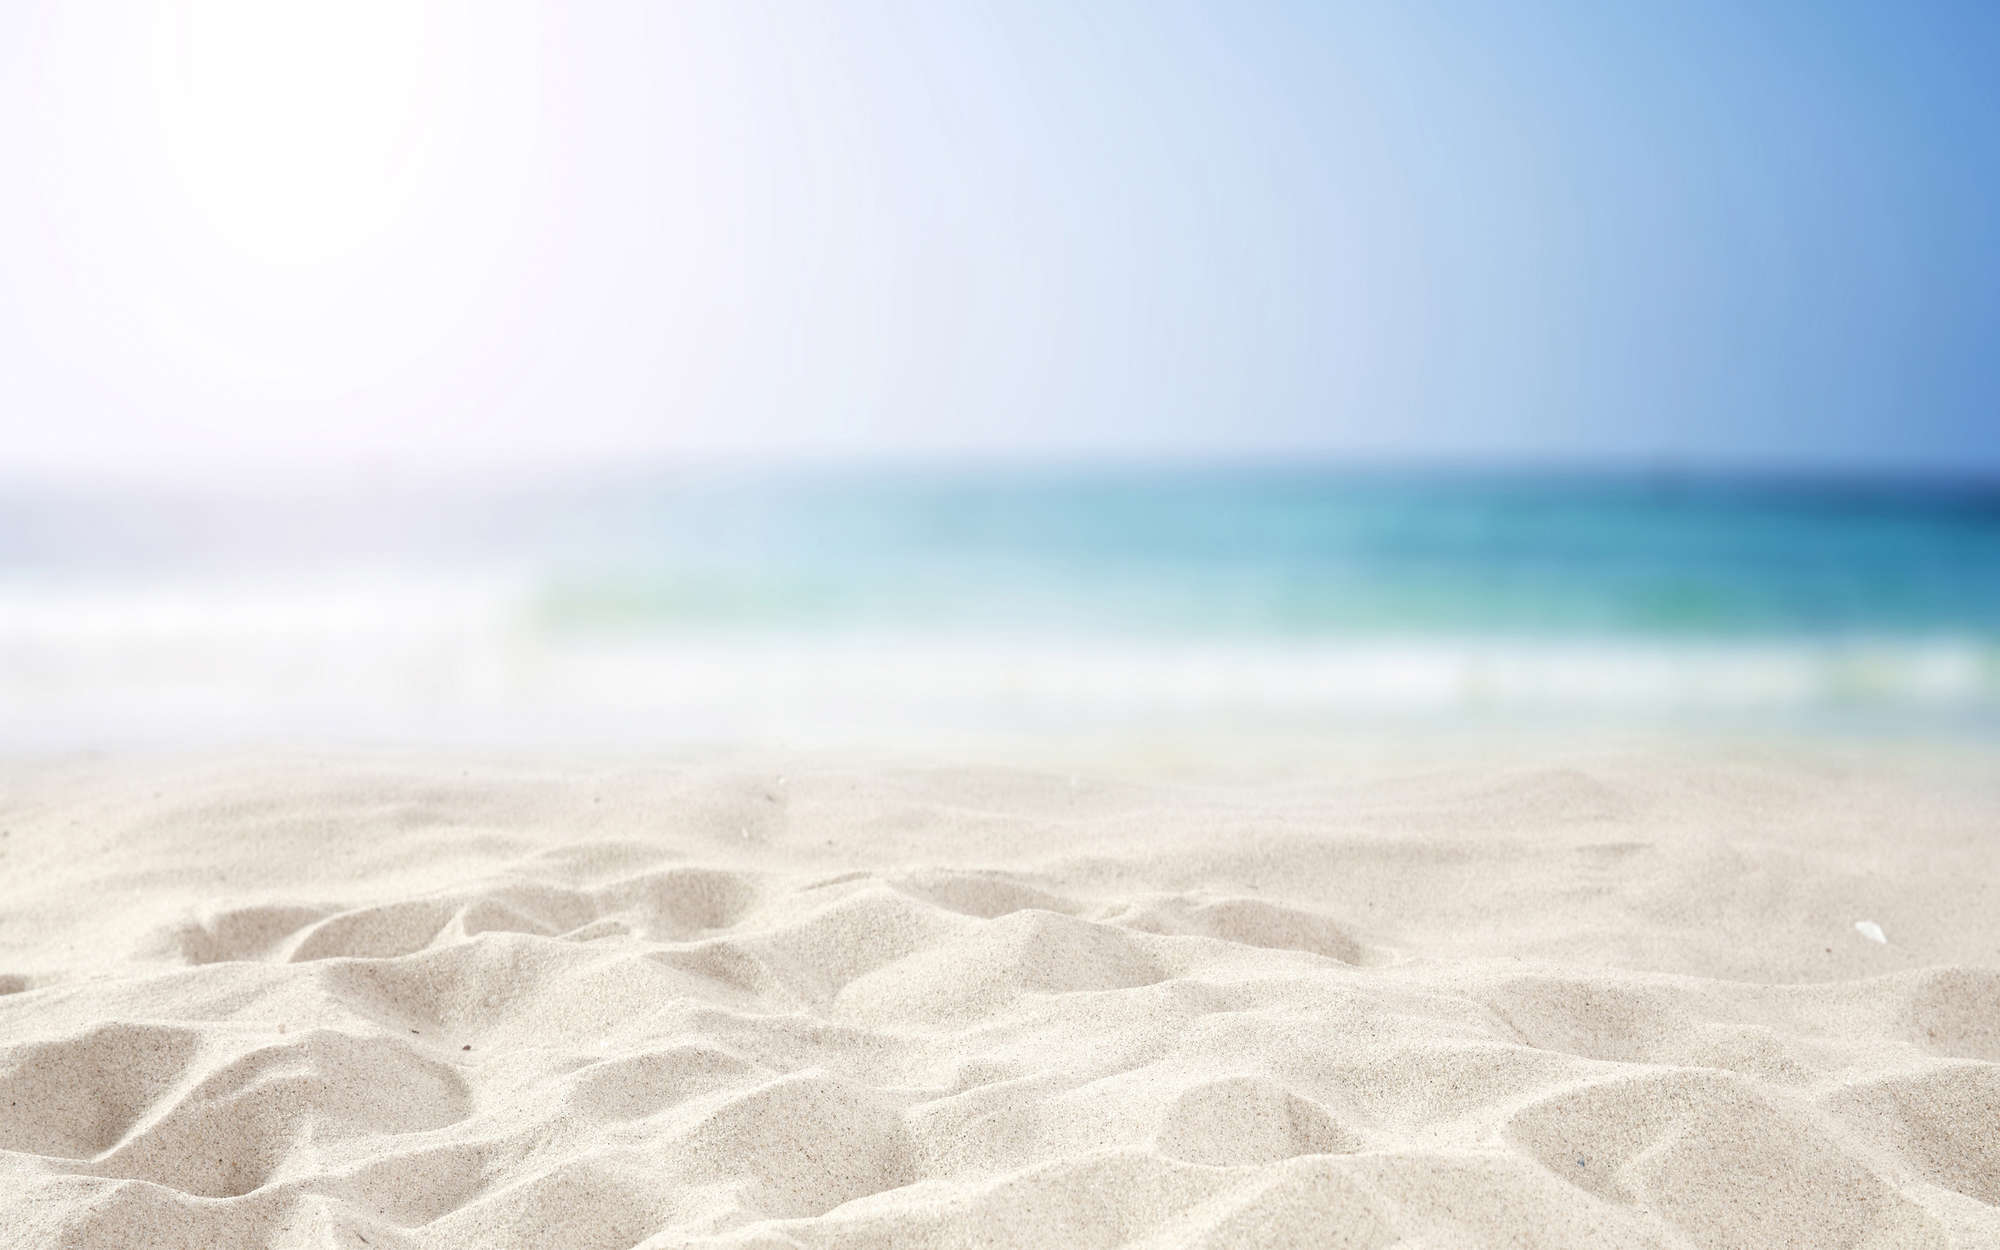             Photo wallpaper beach with sand in white - matt smooth fleece
        